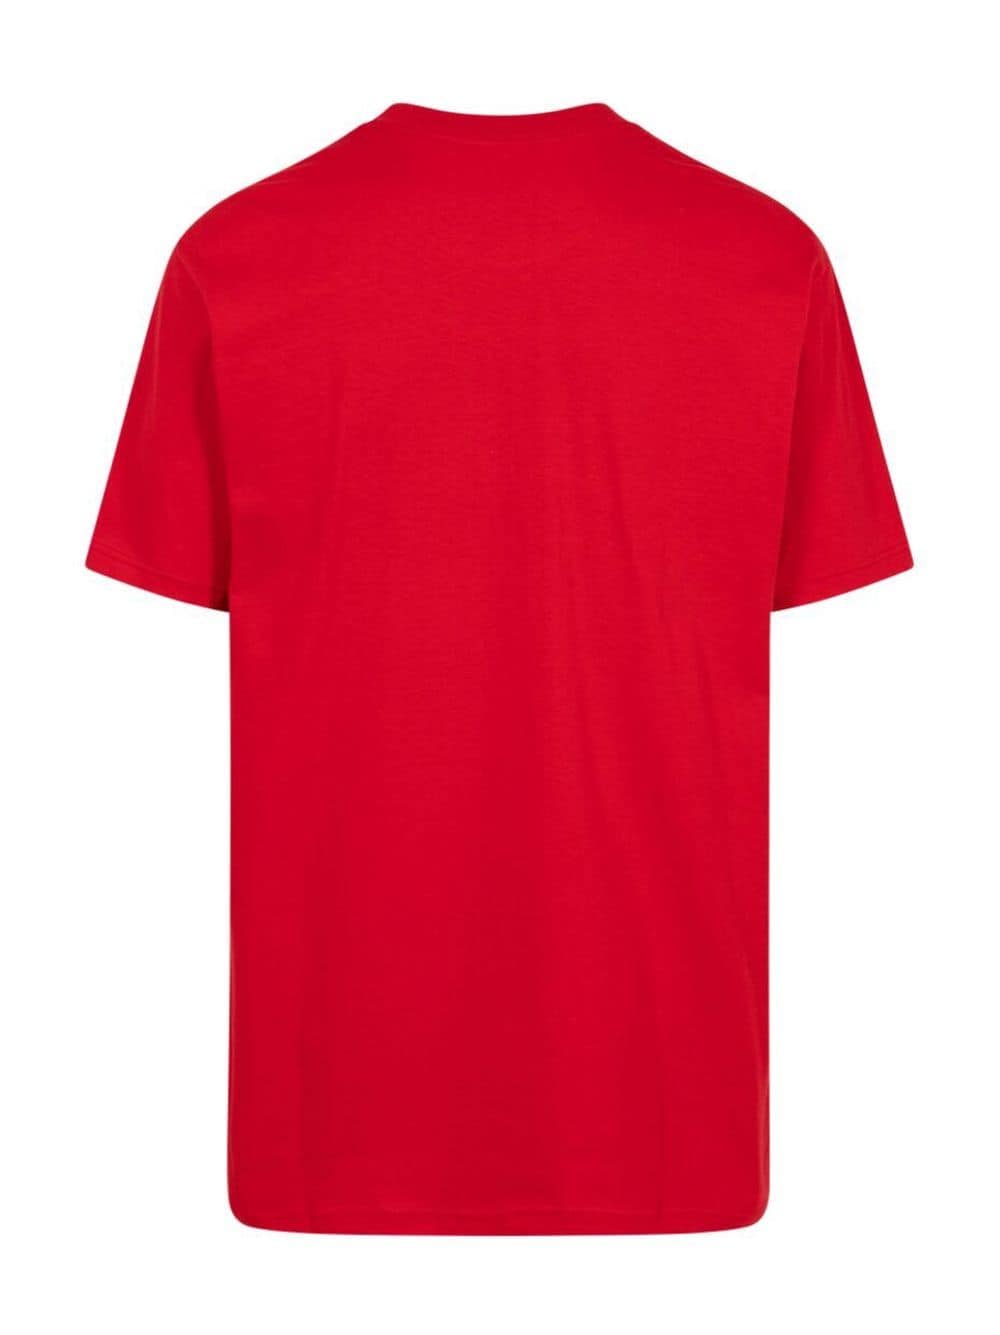 Supreme x Swarovski T-shirt met logo - Rood